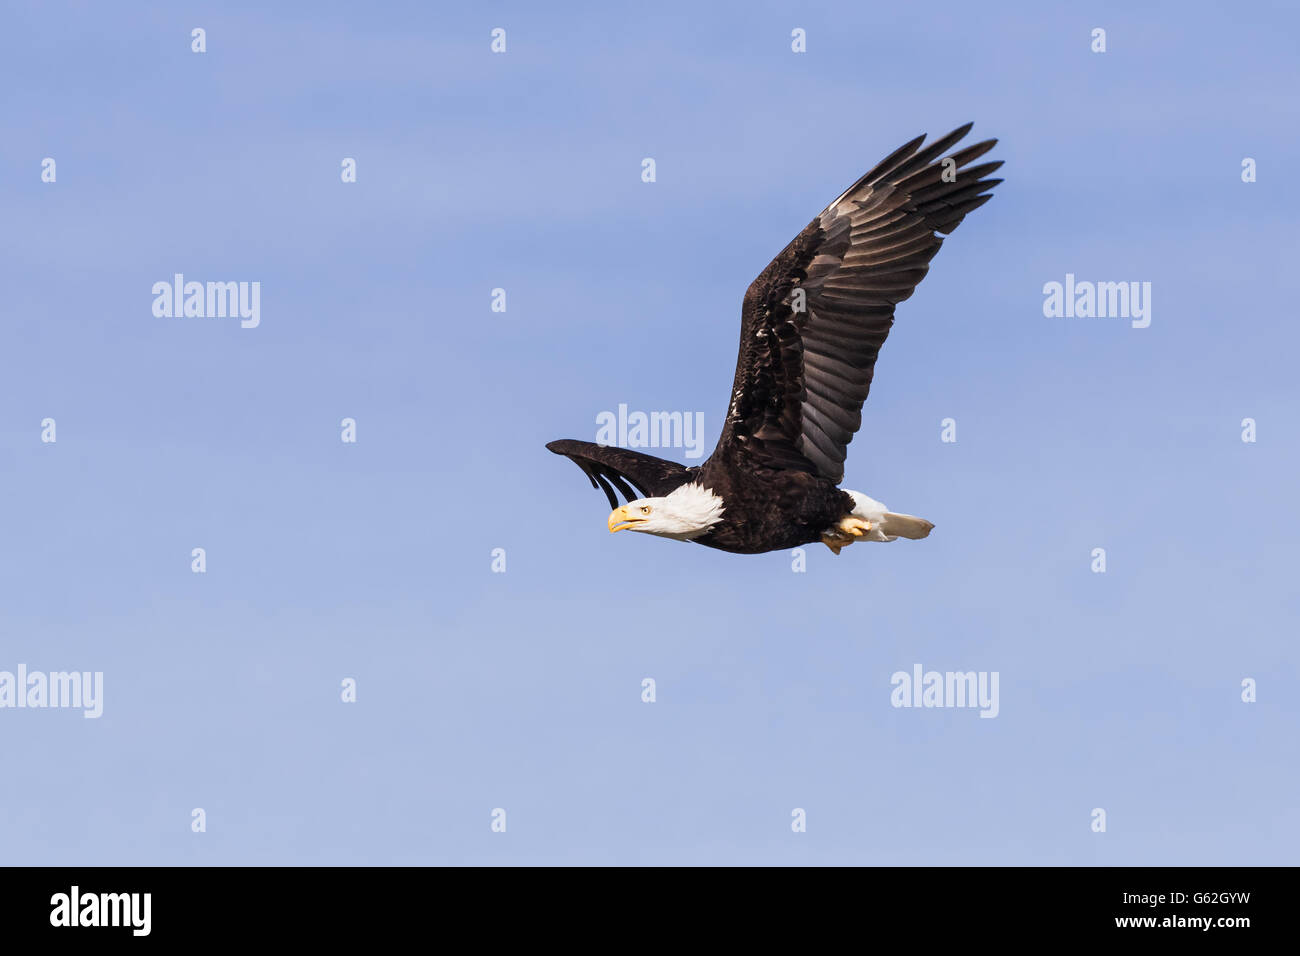 Aquila calva navigando attraverso un cielo blu chiaro Foto Stock